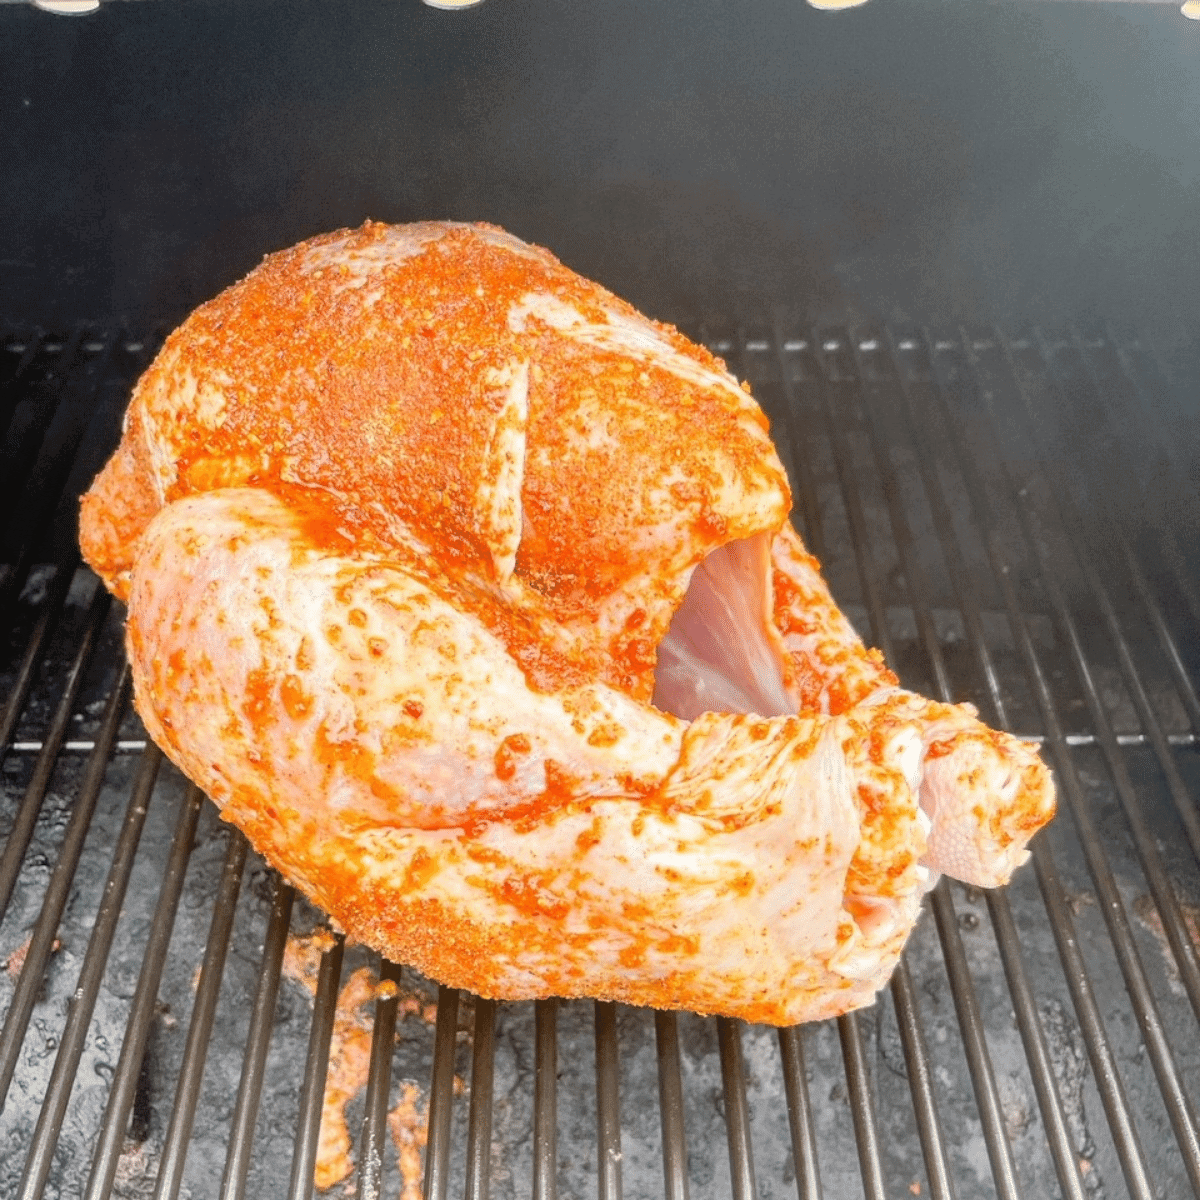 Place seasoned turkey directly on rack of preheated pellet grill